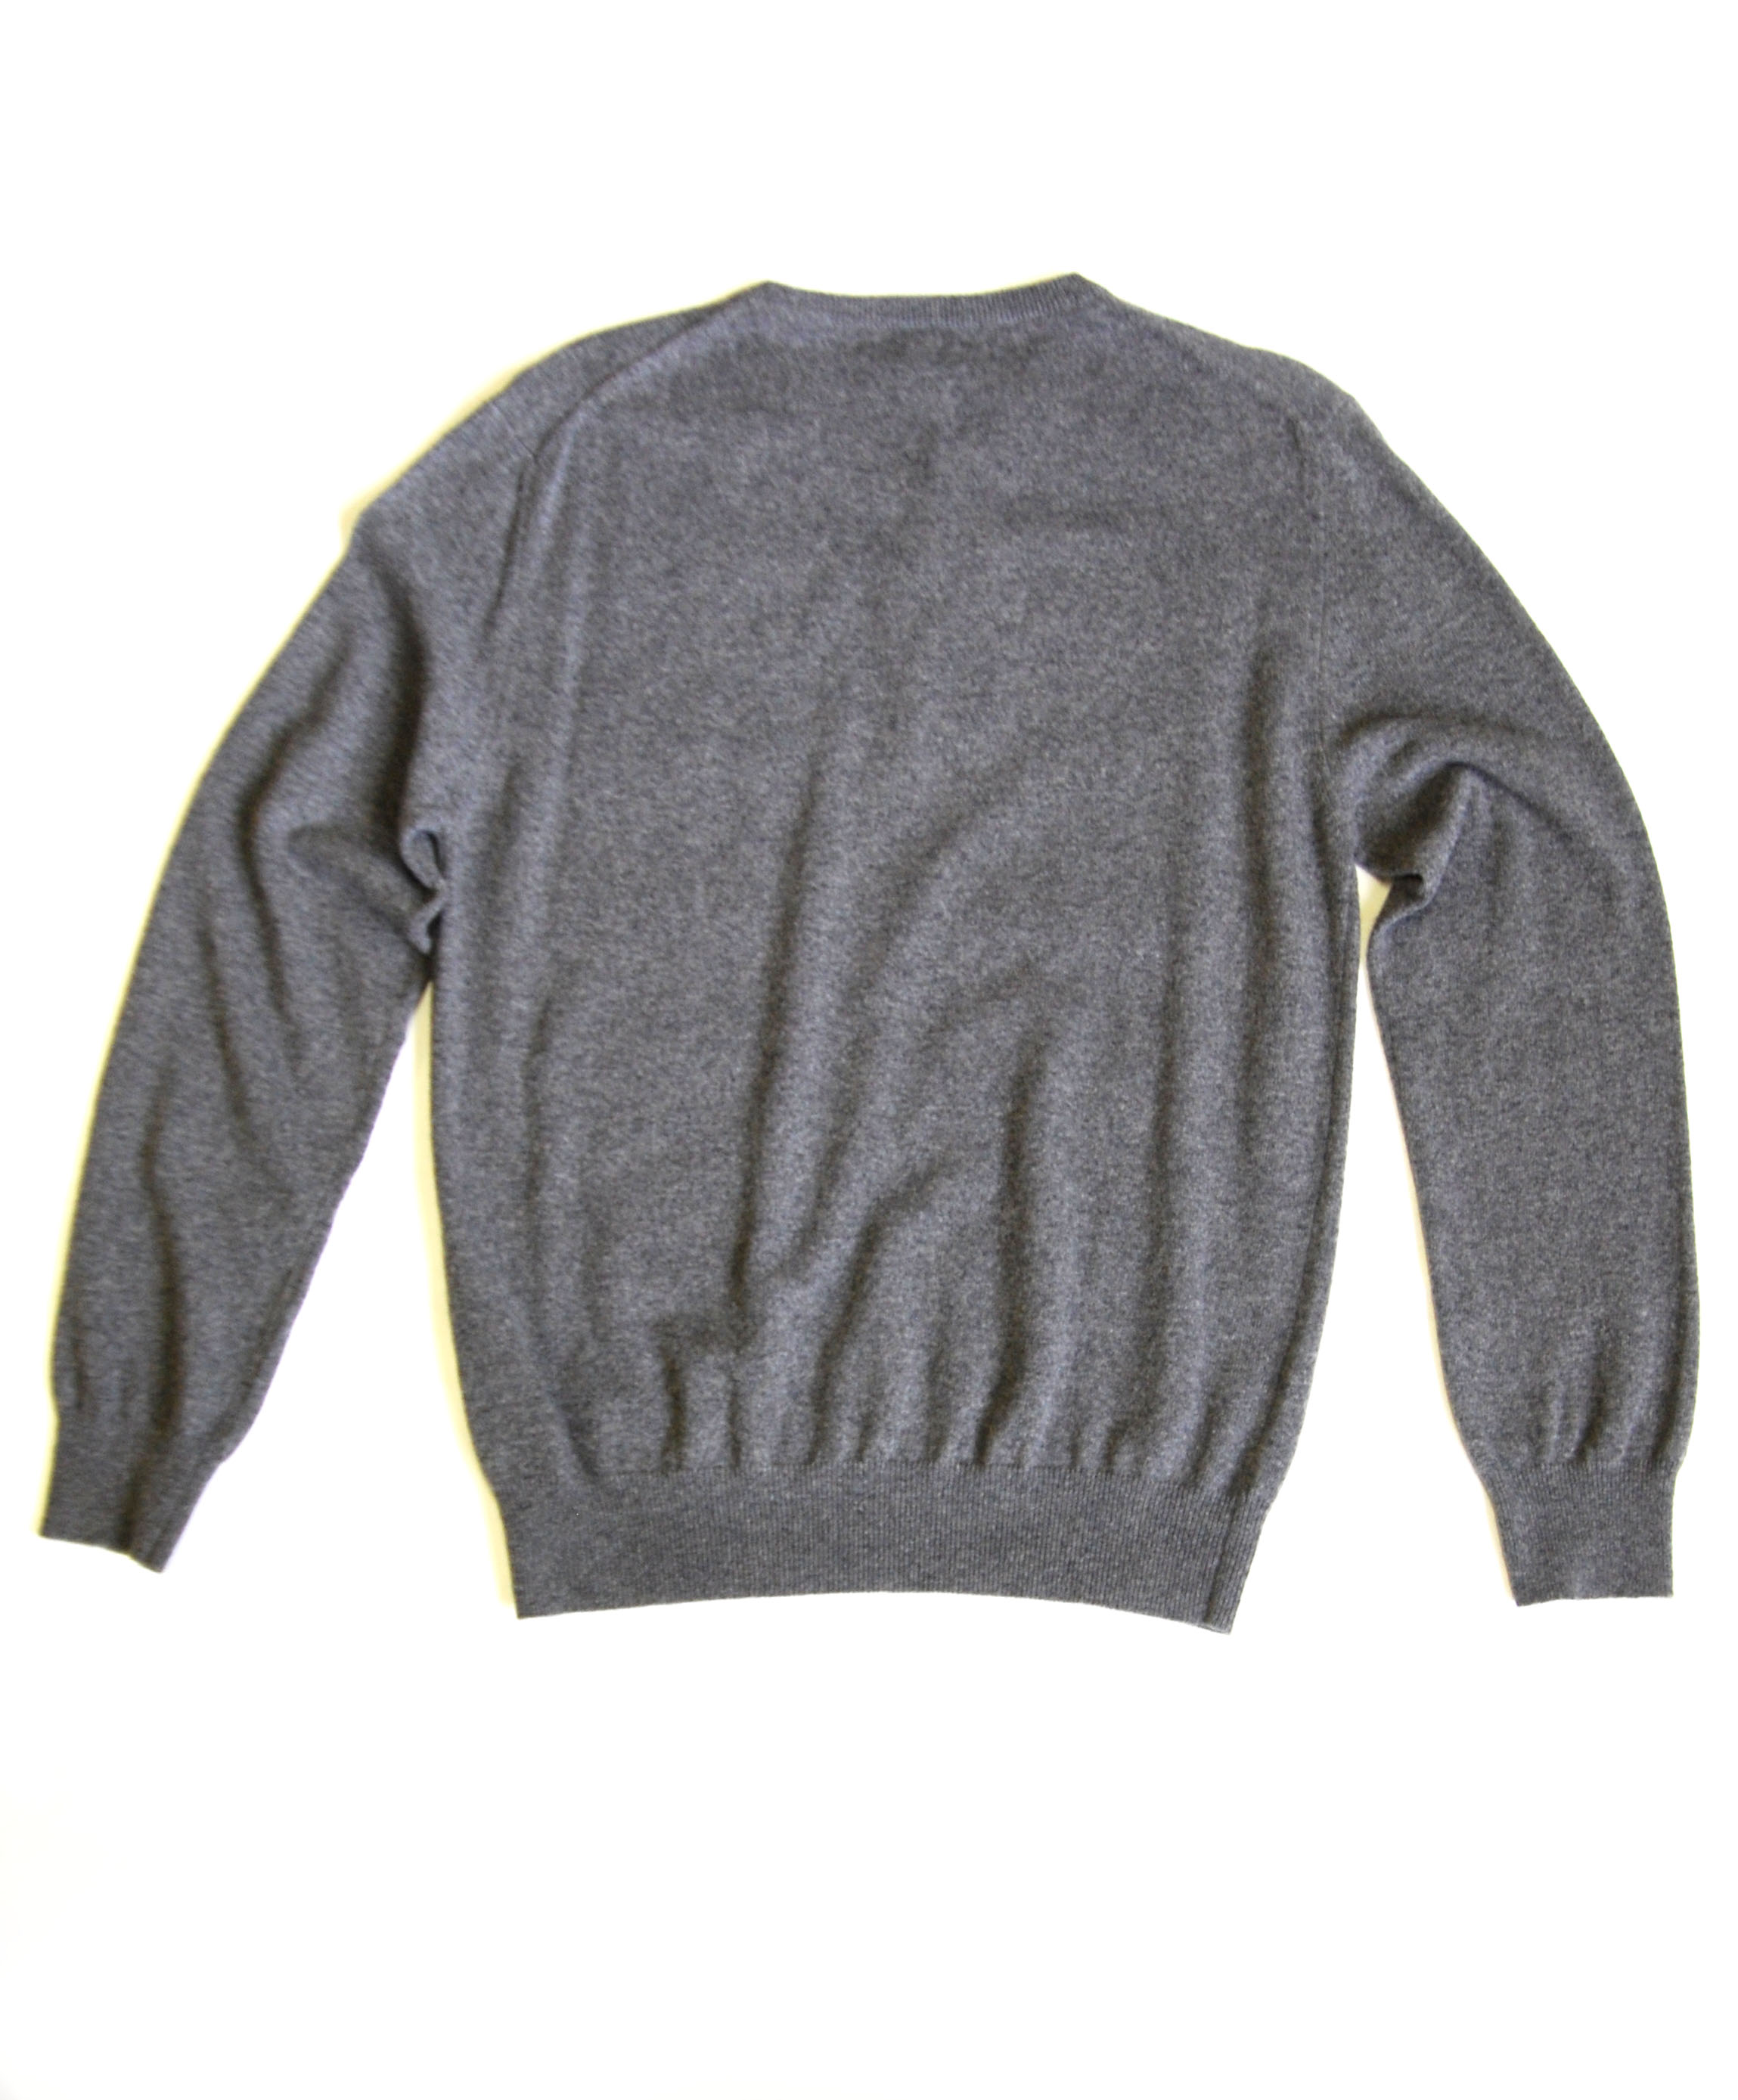 Designer Cashmere Sweater by Mantovani Studio